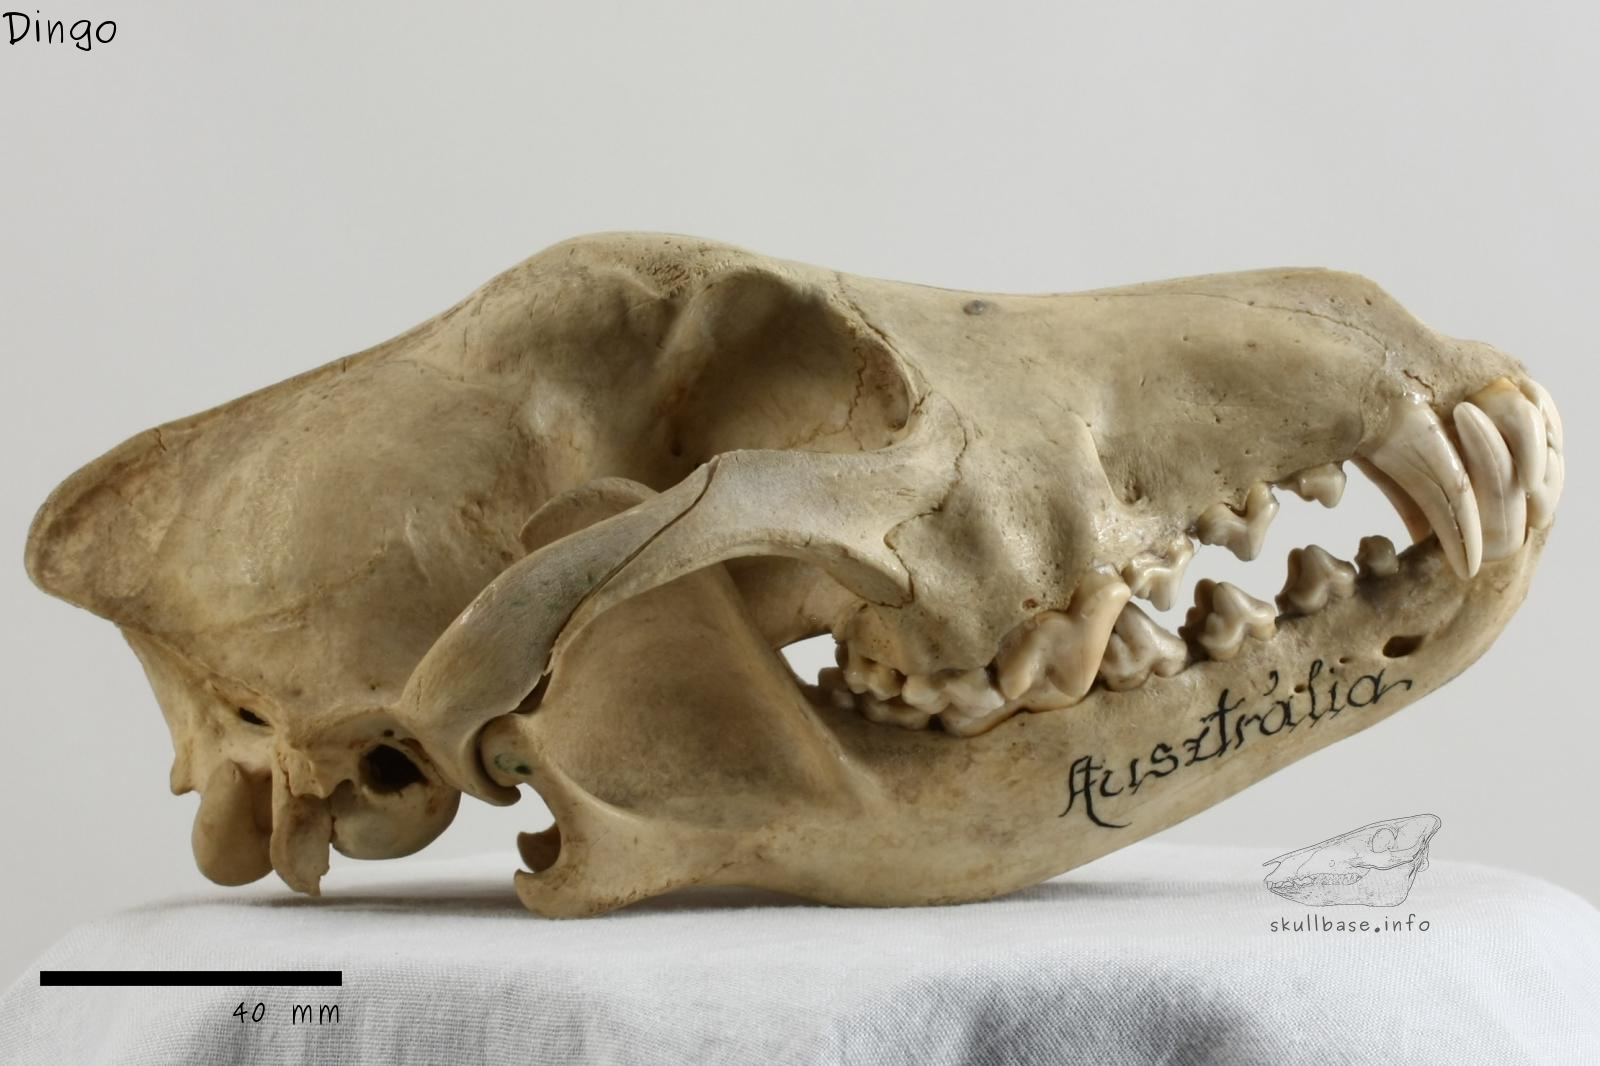 Dingo (Canis lupus dingo) skull lateral view